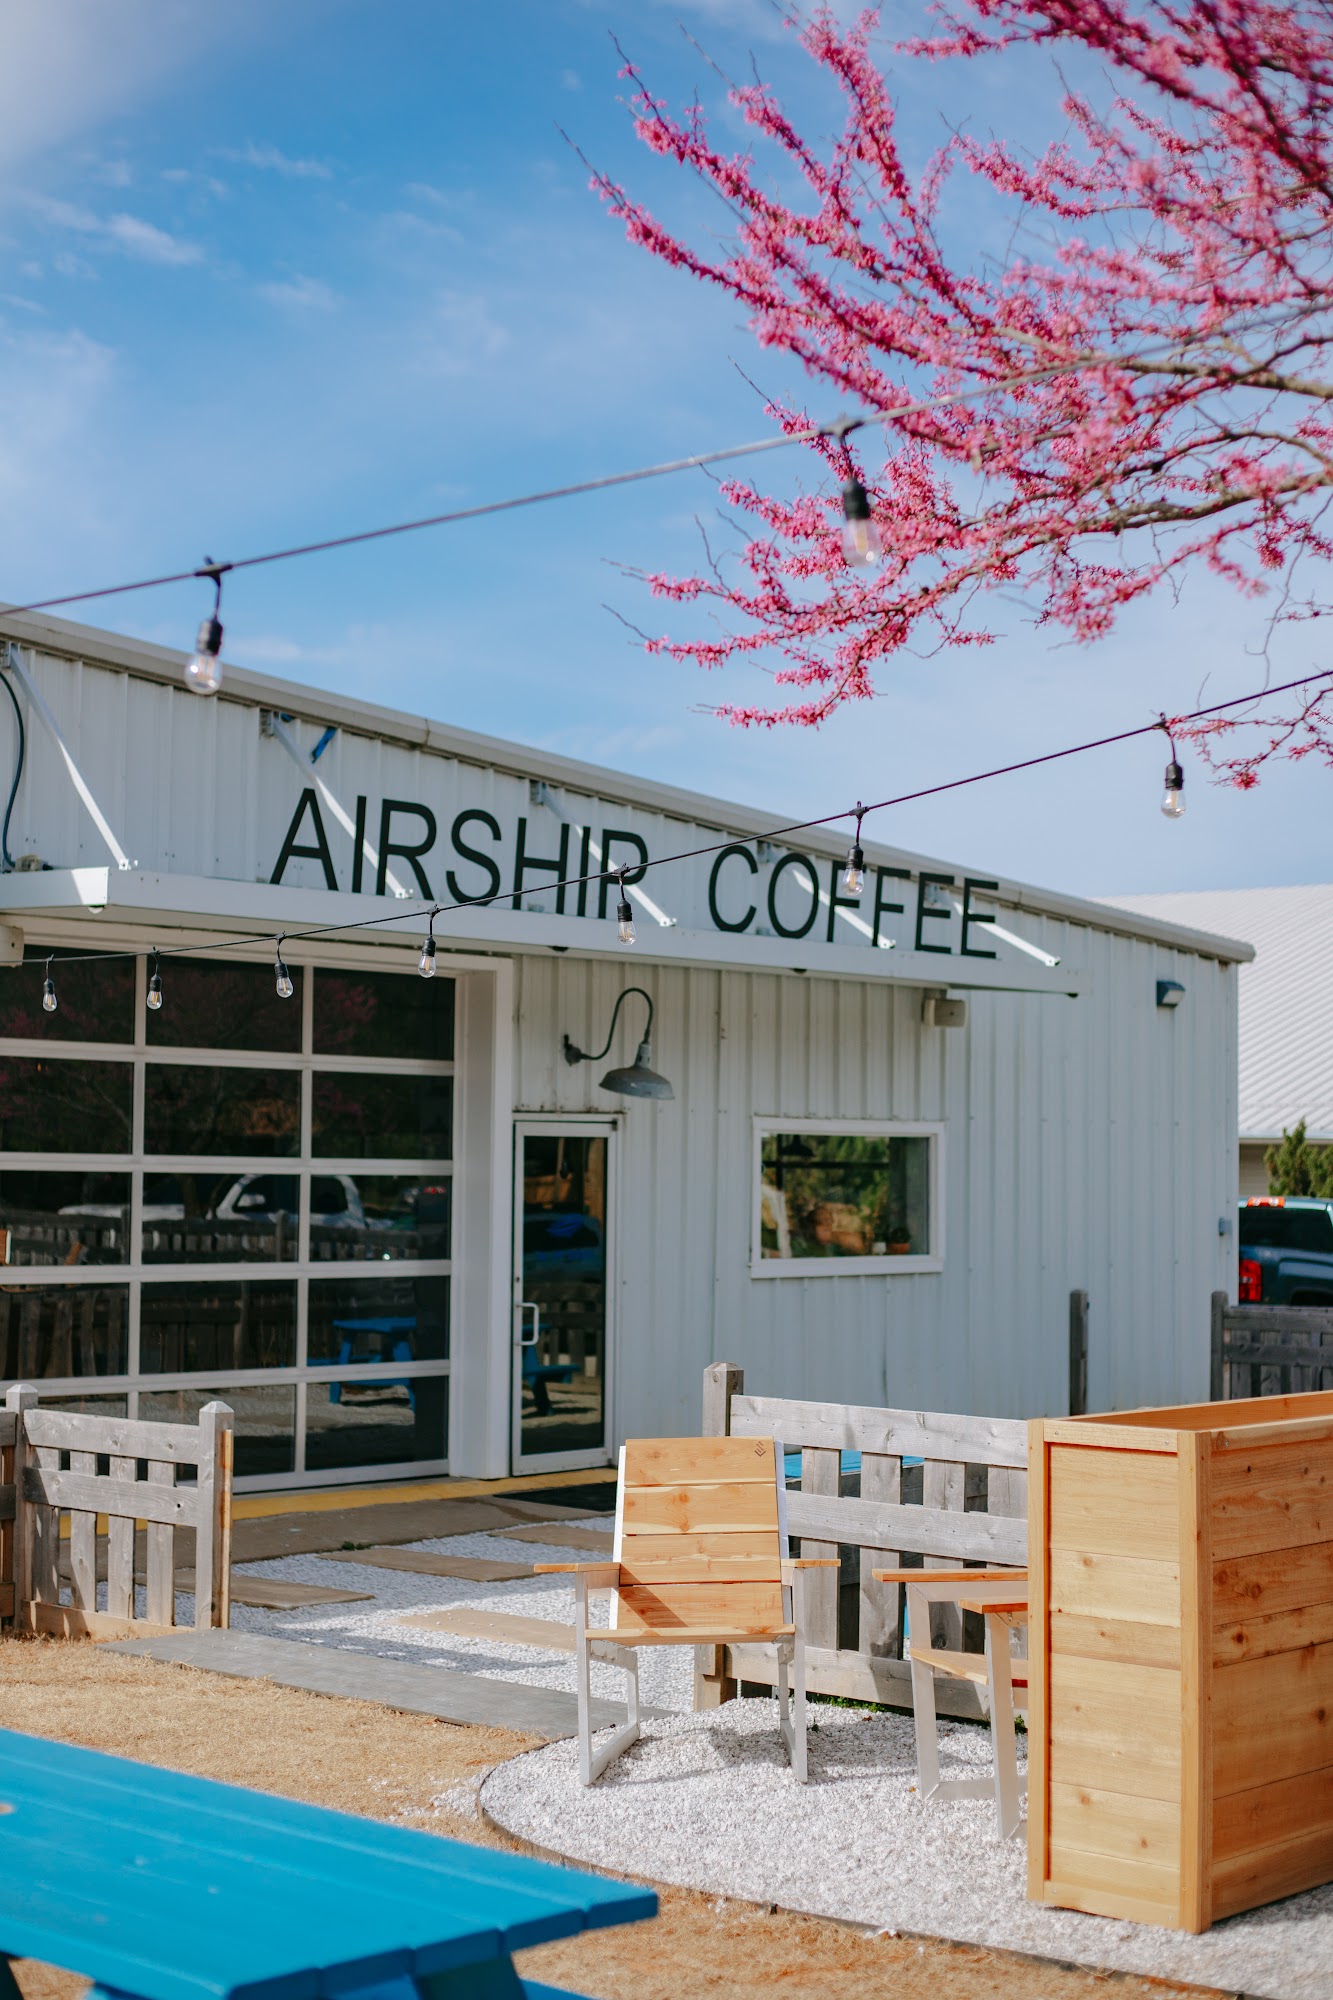 Airship Coffee at 5th Street